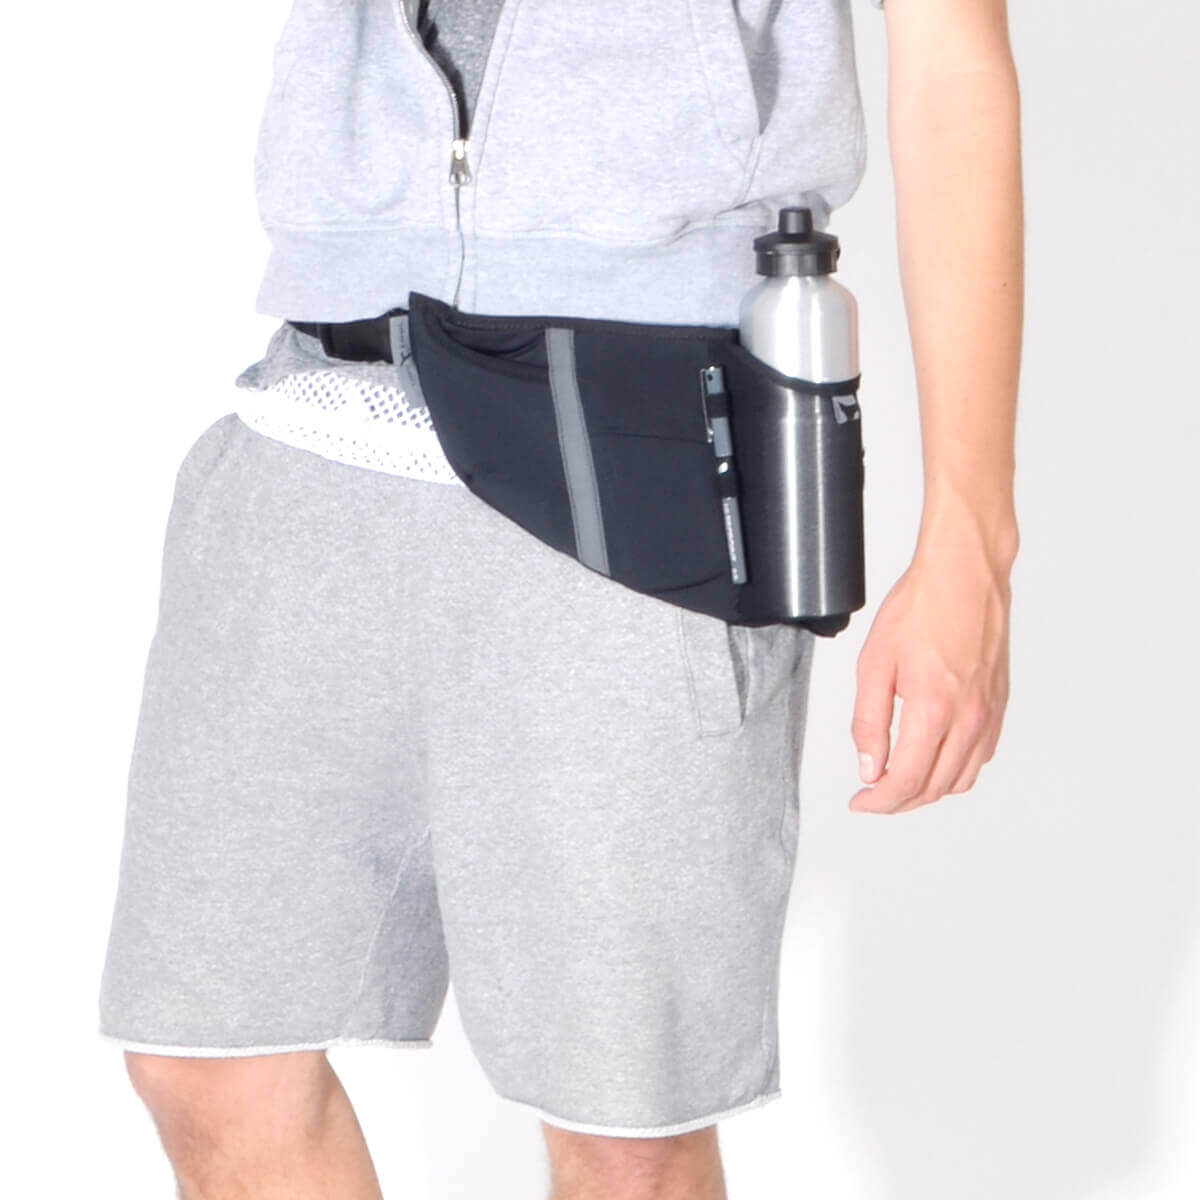 Carrying iPhone Money Running Packs Gear with Phone Water Bottle Holder Adjustable Belt for Travel Workout Hiking ENGYEN Fanny Pack Waist Bag for Women Men 